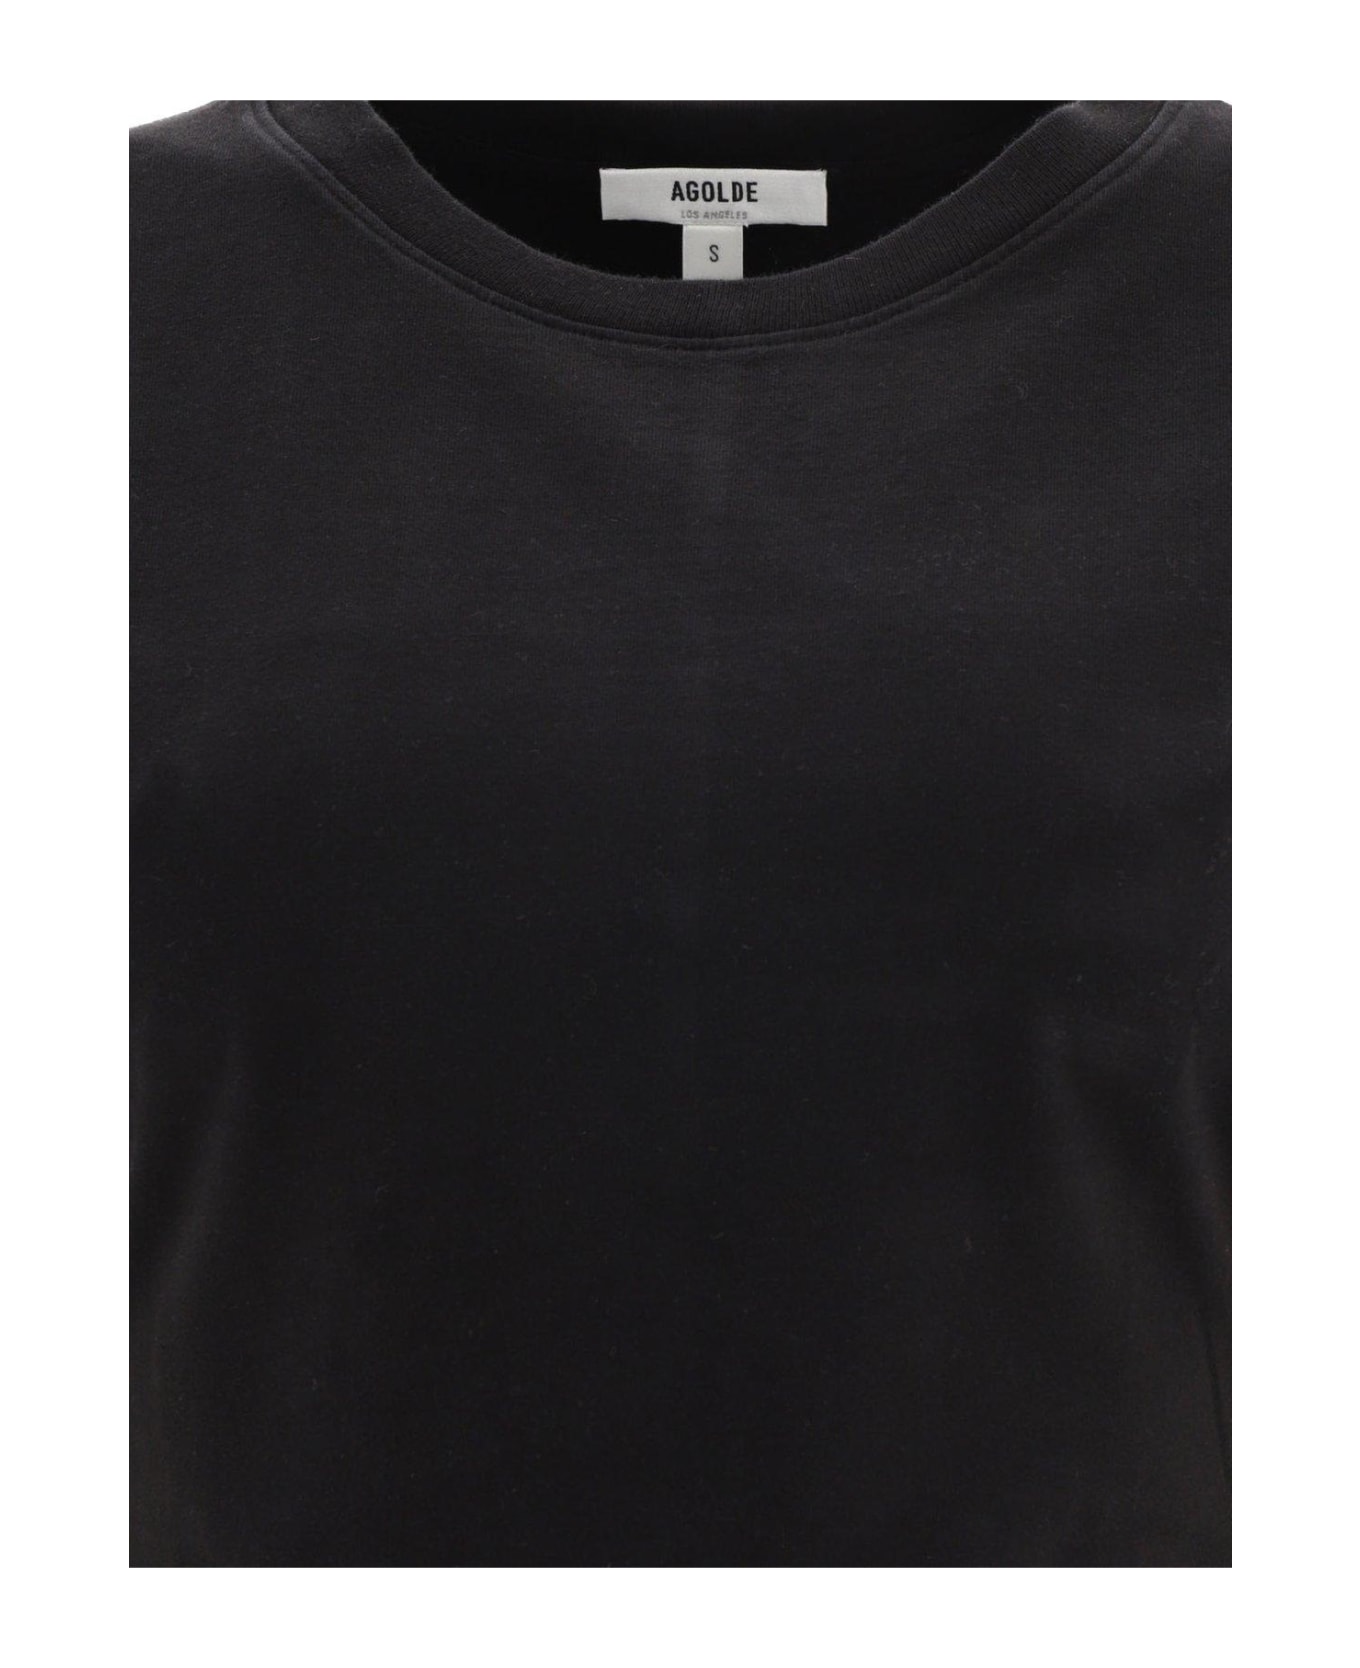 AGOLDE Britt Crewneck T-shirt - BLACK